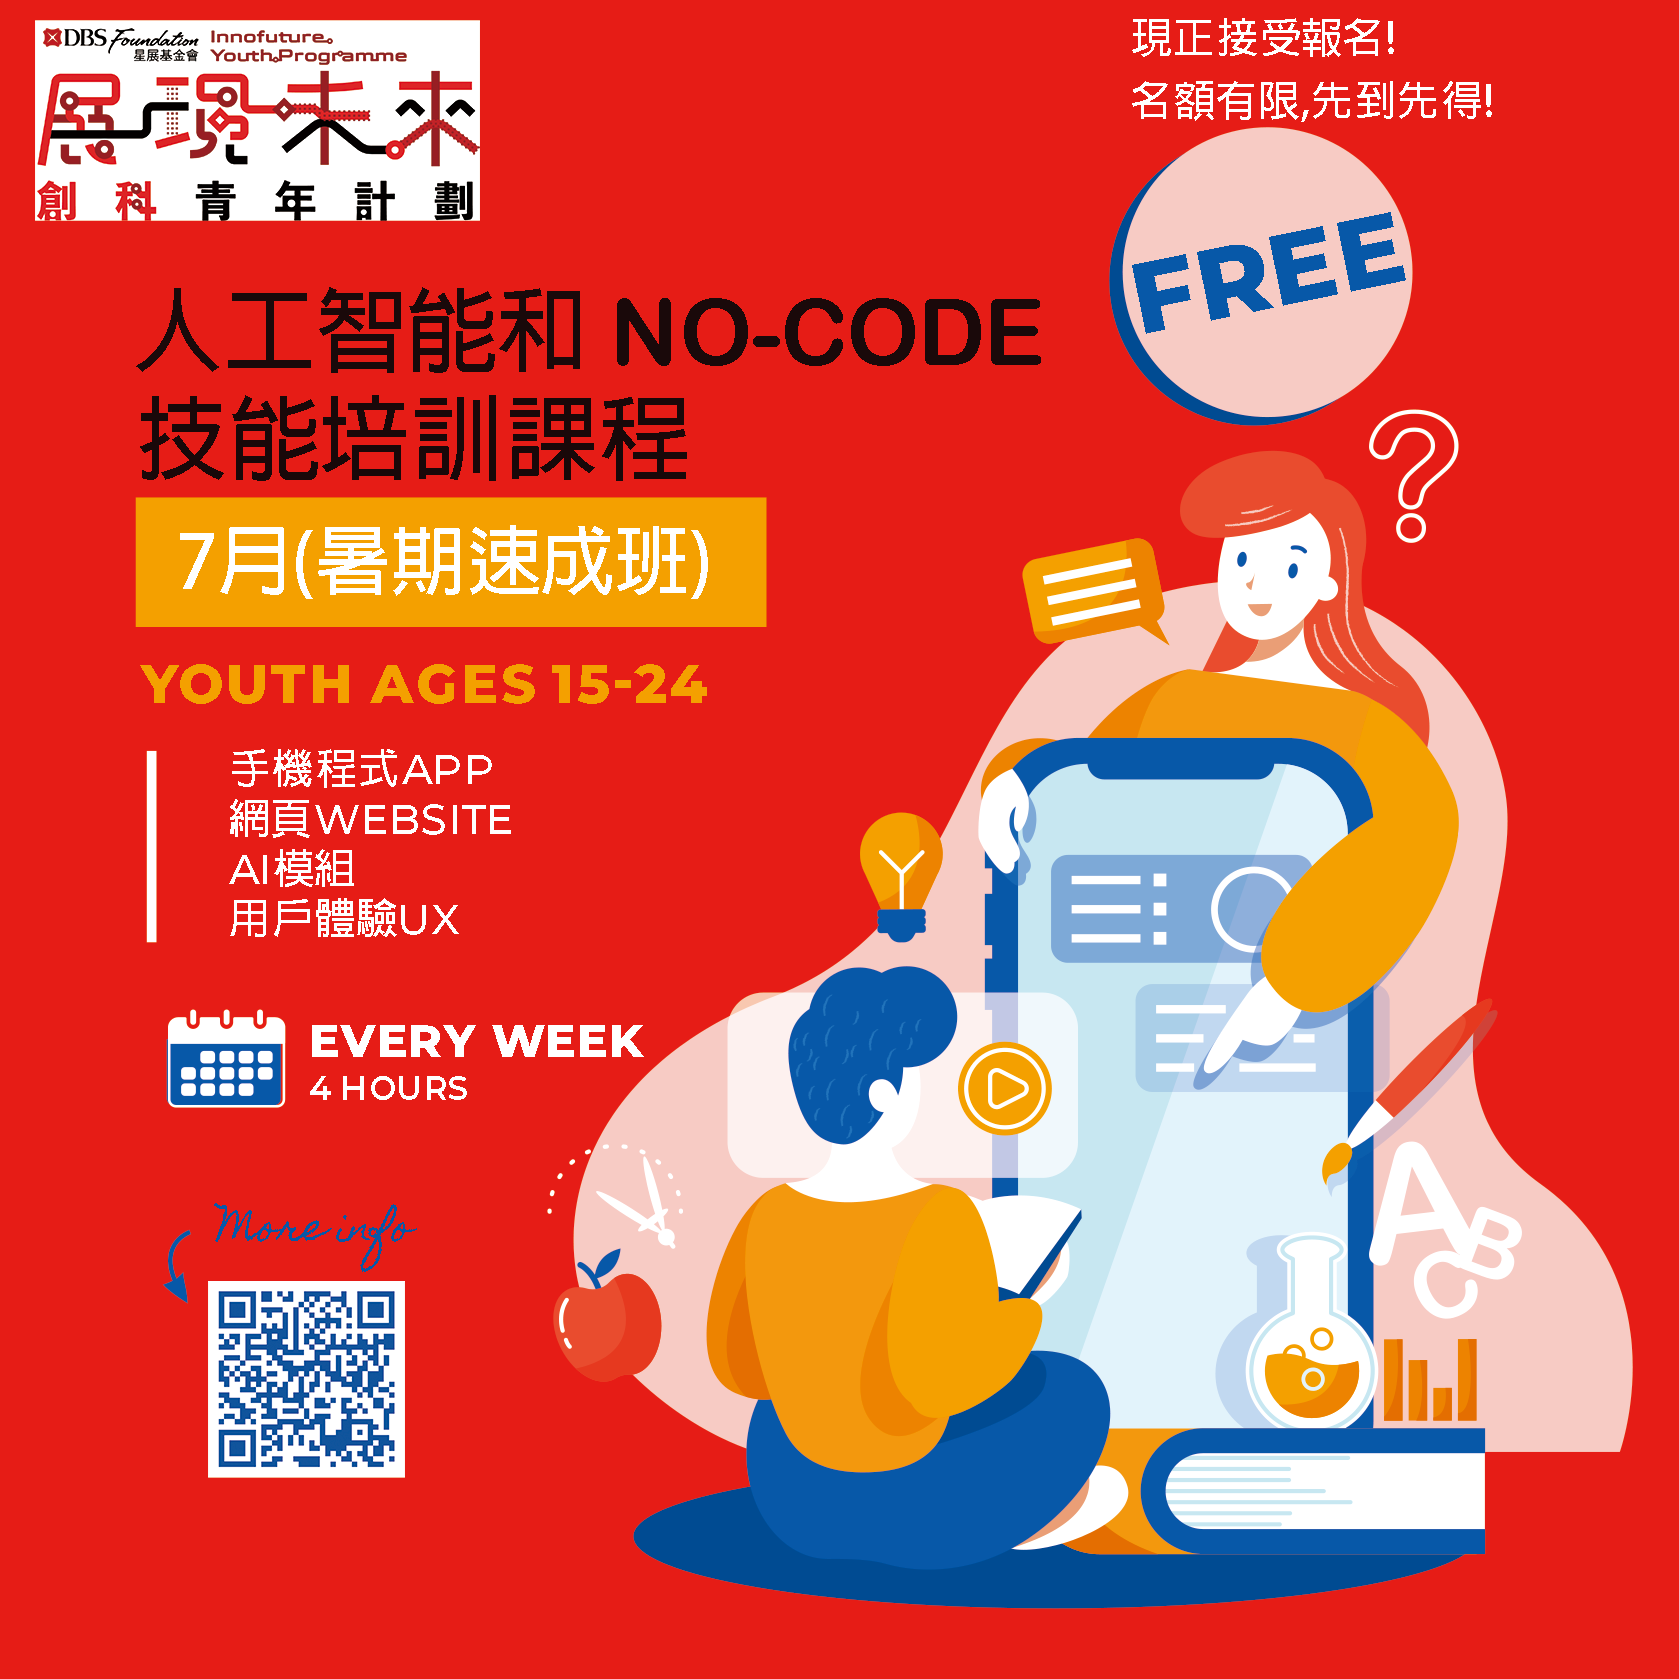 No-code workshop (july)